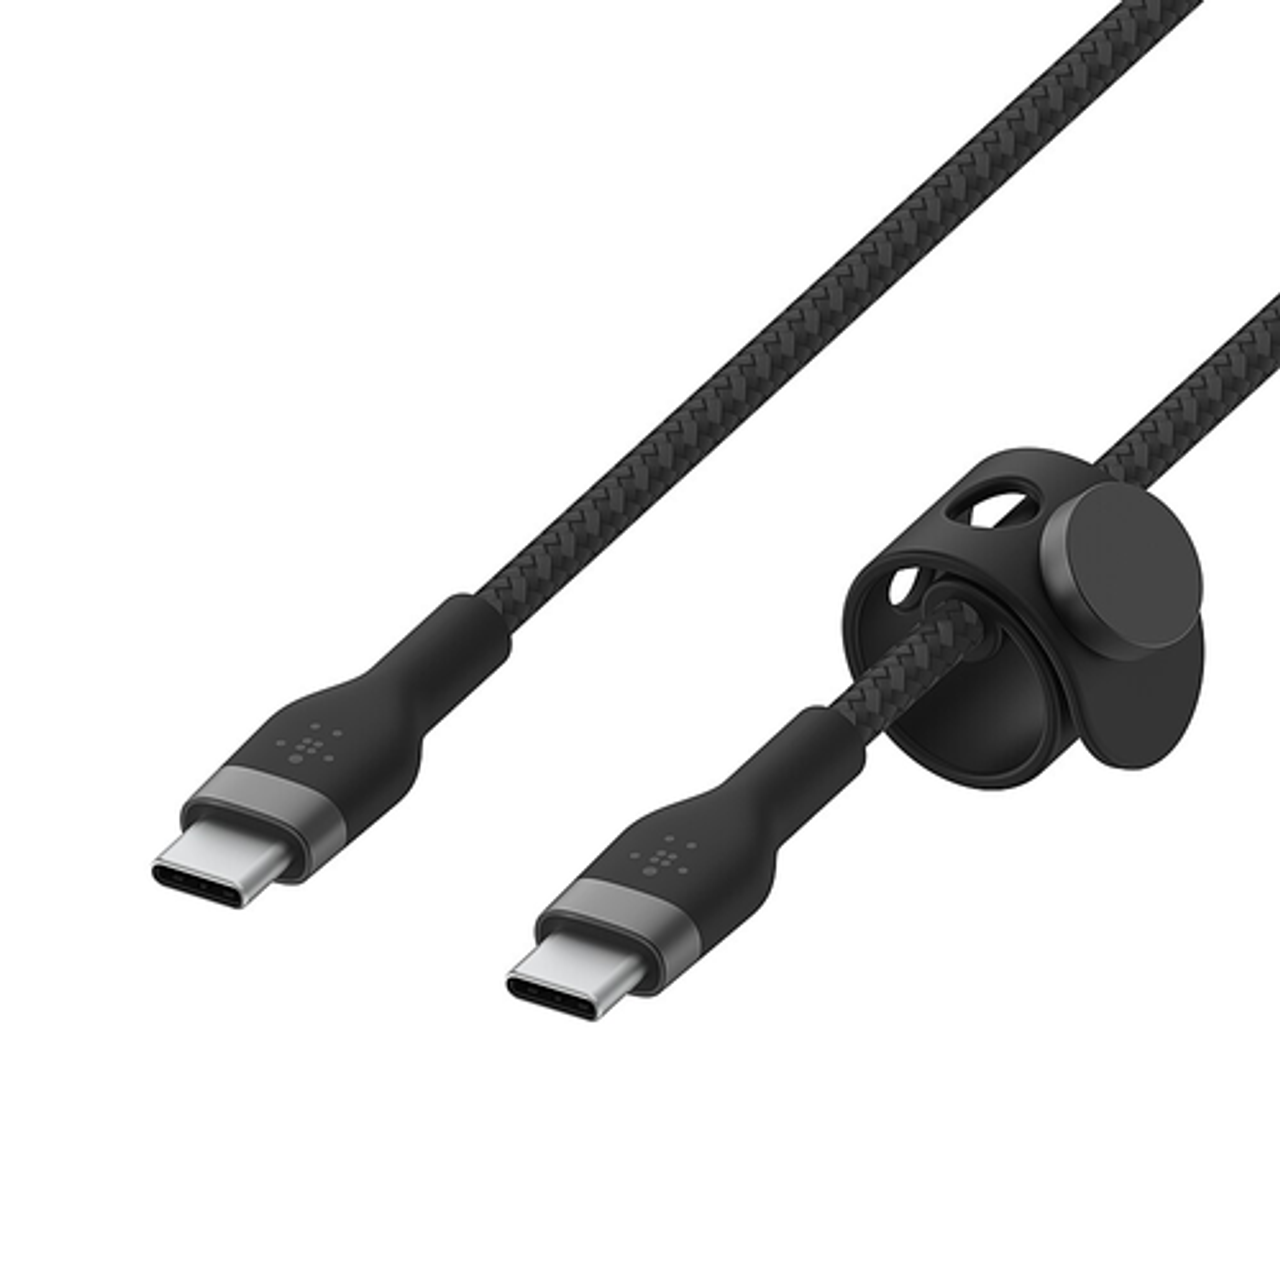 Belkin - BOOSTCHARGE PRO Flex USB-C® to USB-C Cable - Black